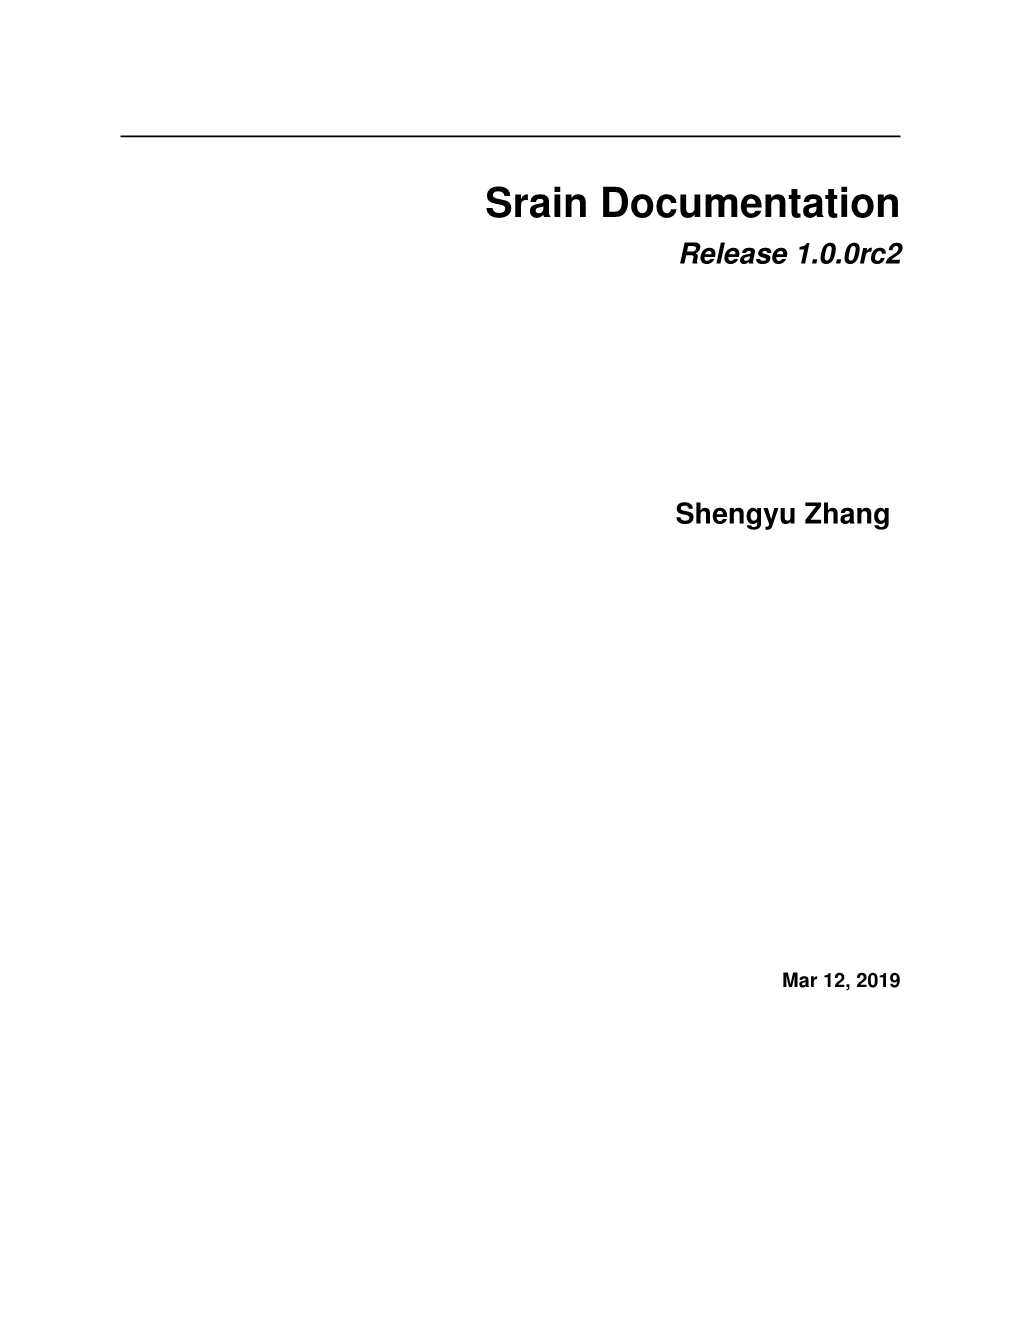 Srain Documentation Release 1.0.0Rc2